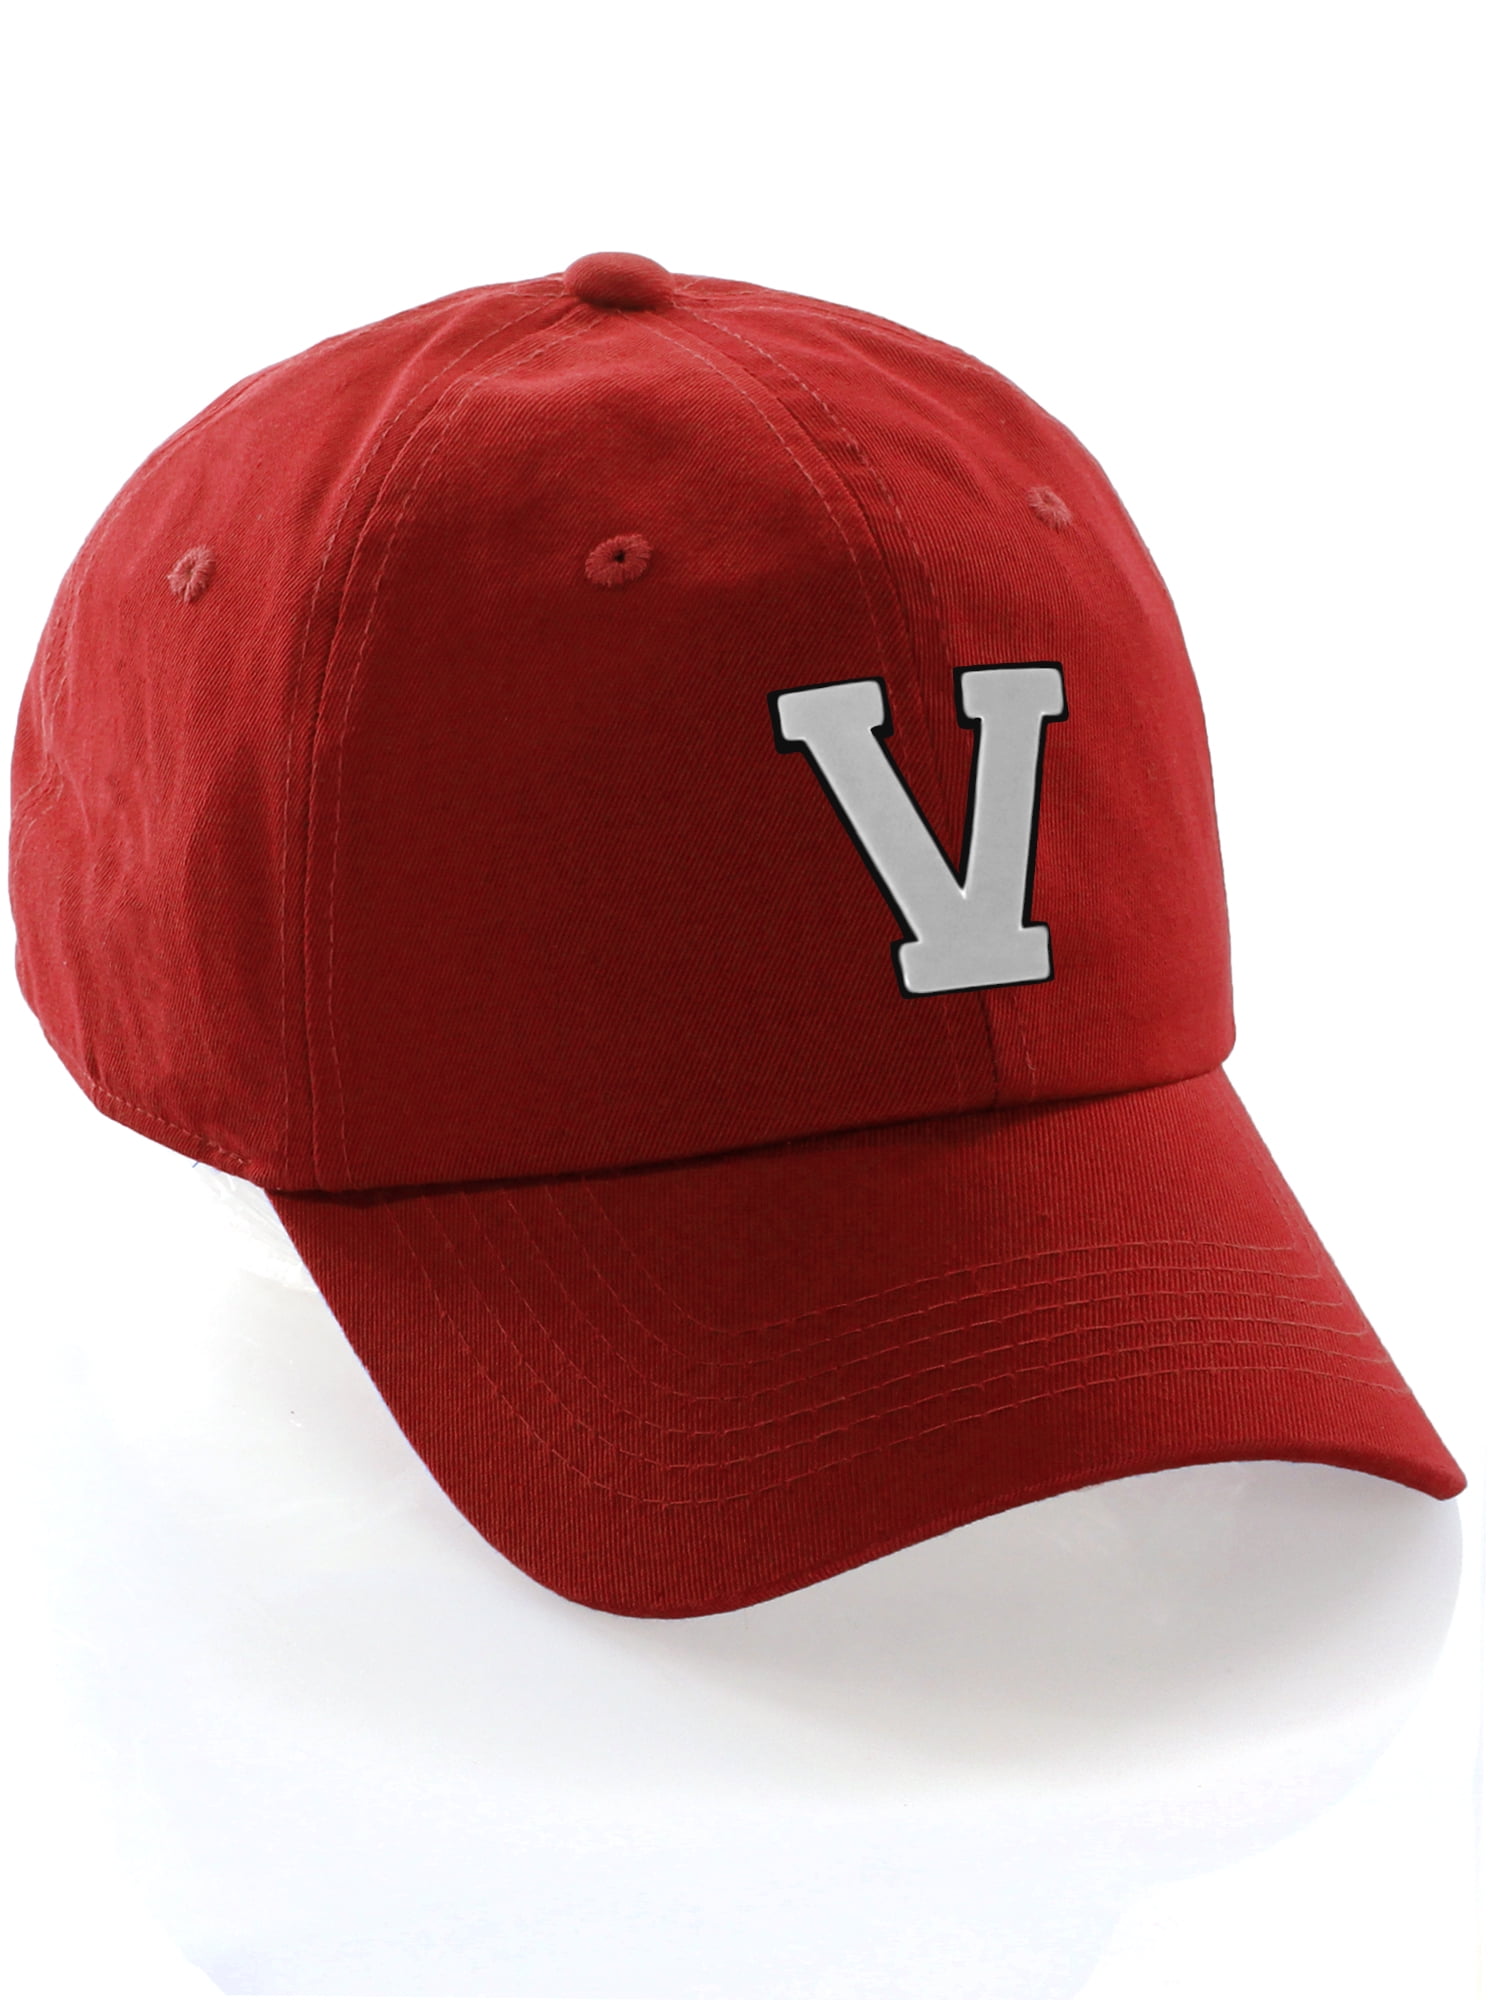 Red Casual Baseball Fashion Sports Cap, Size: M